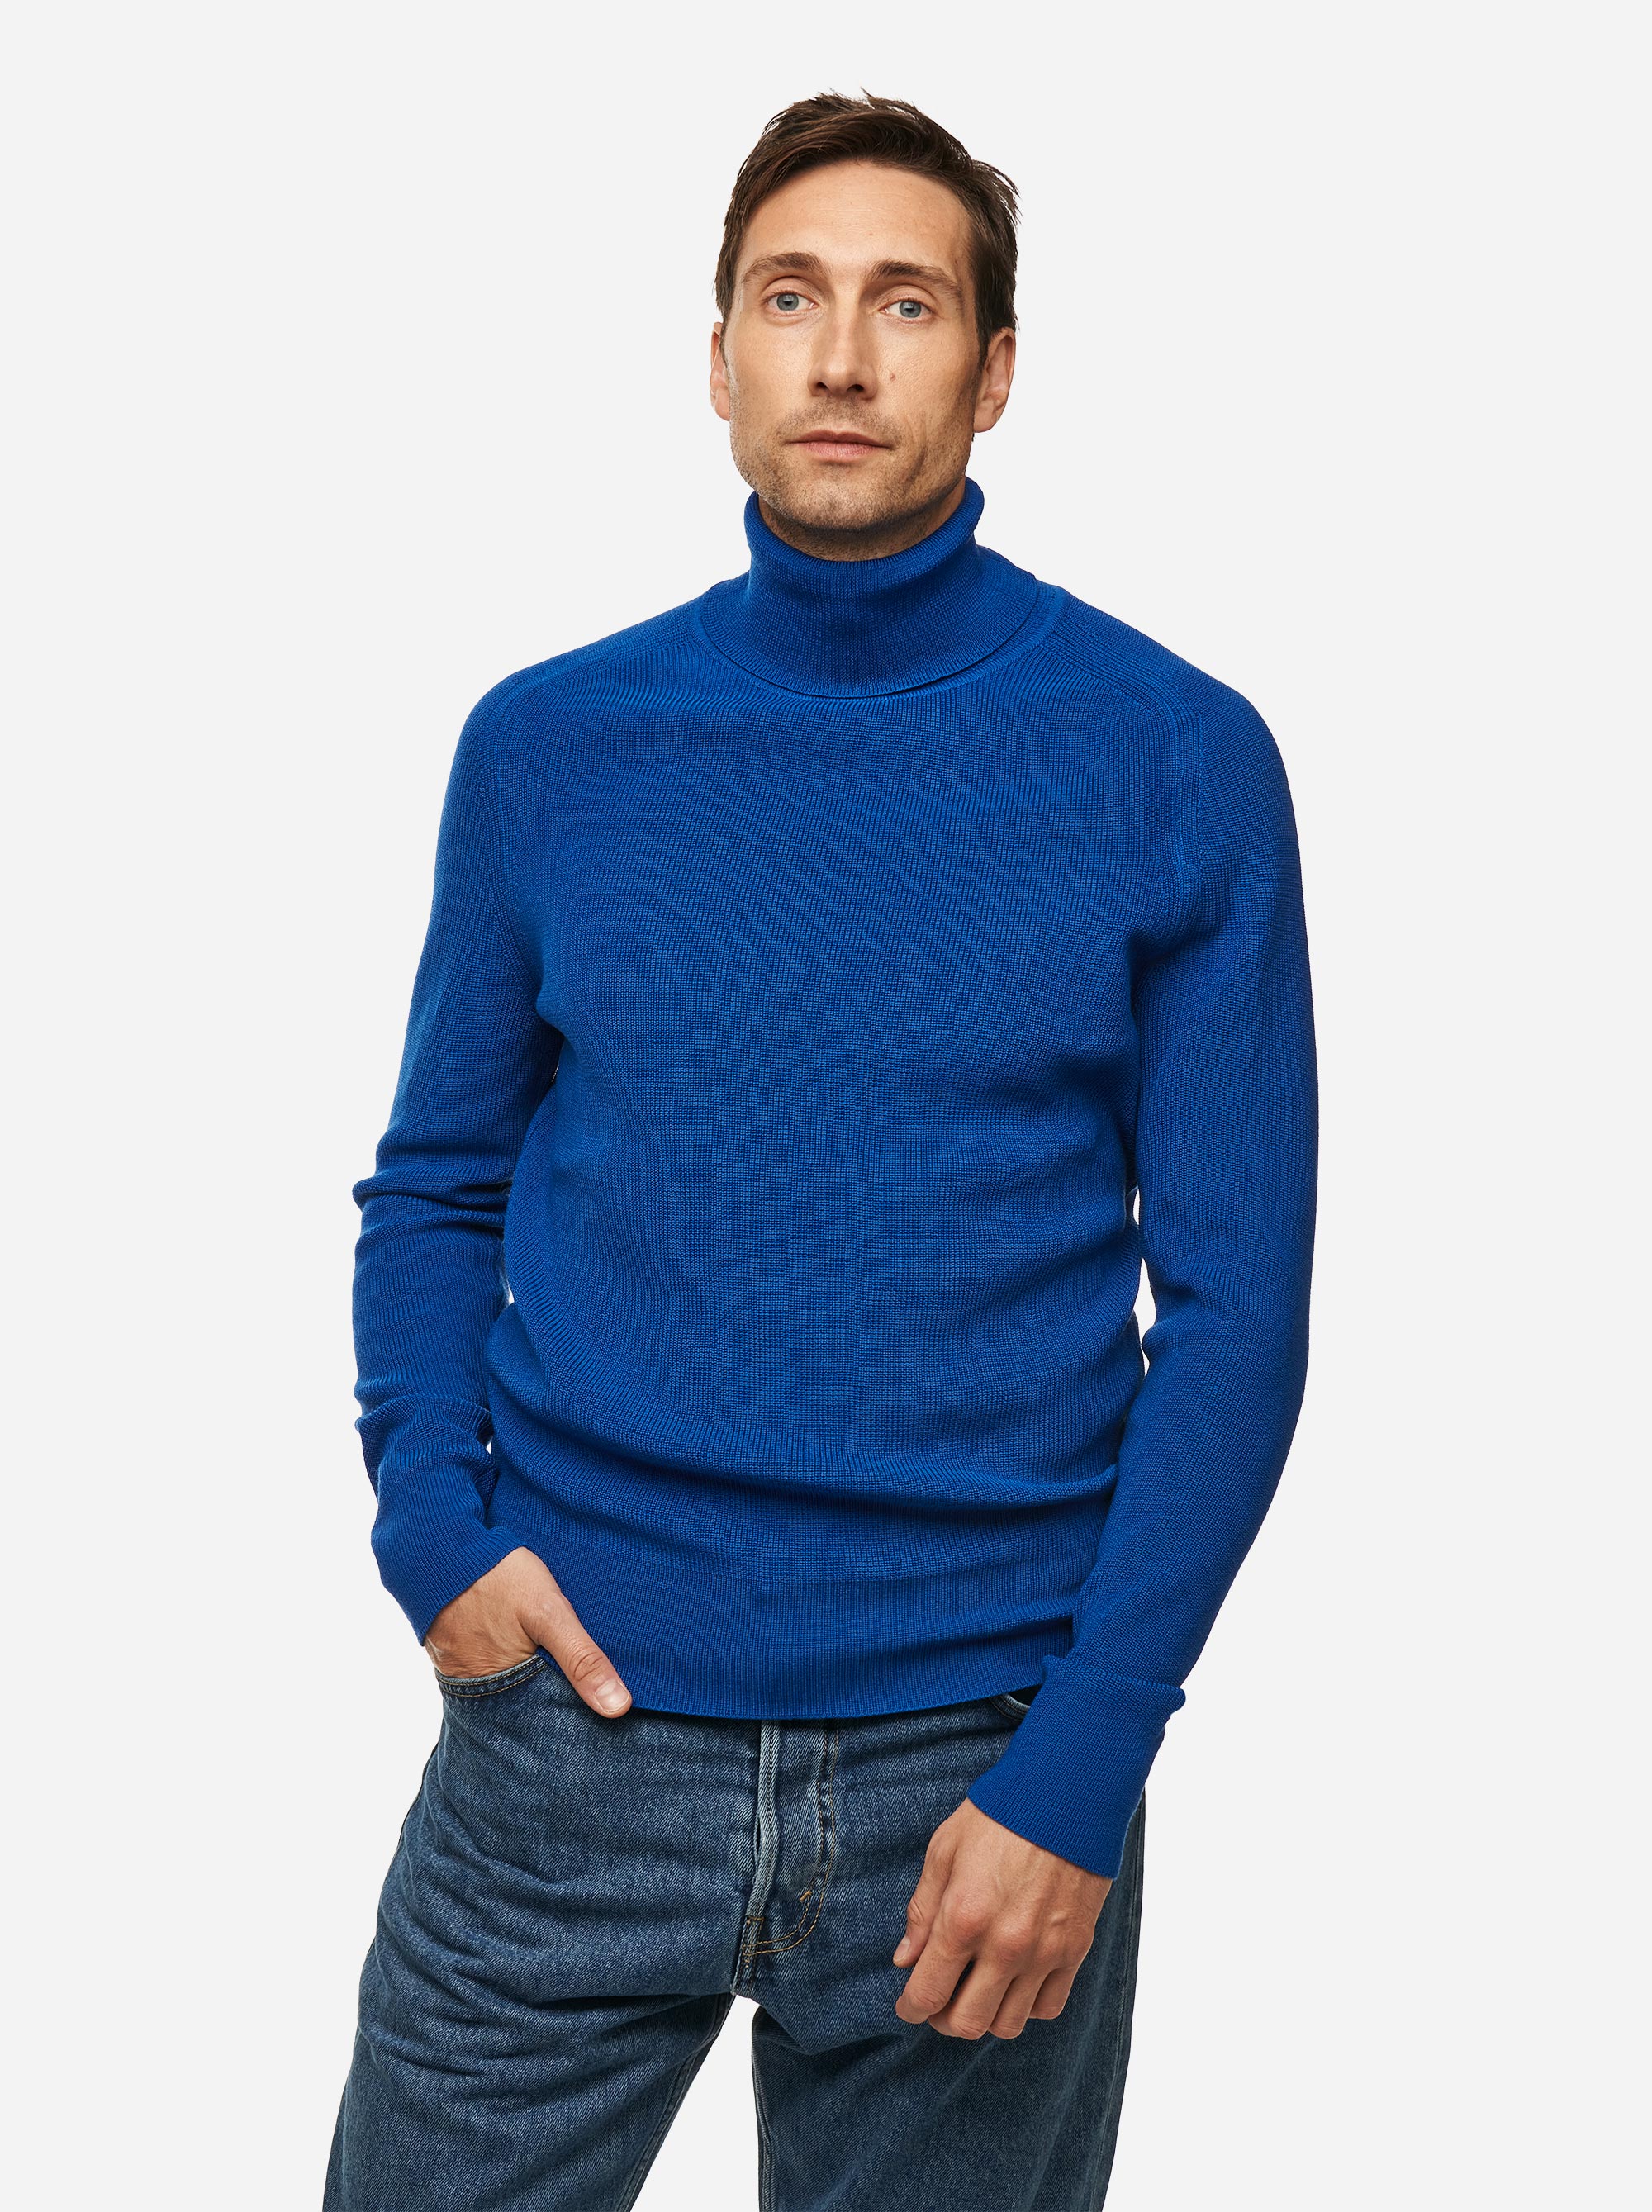 Teym - Turtleneck - The Merino Sweater - Men - Cobalt blue - 1